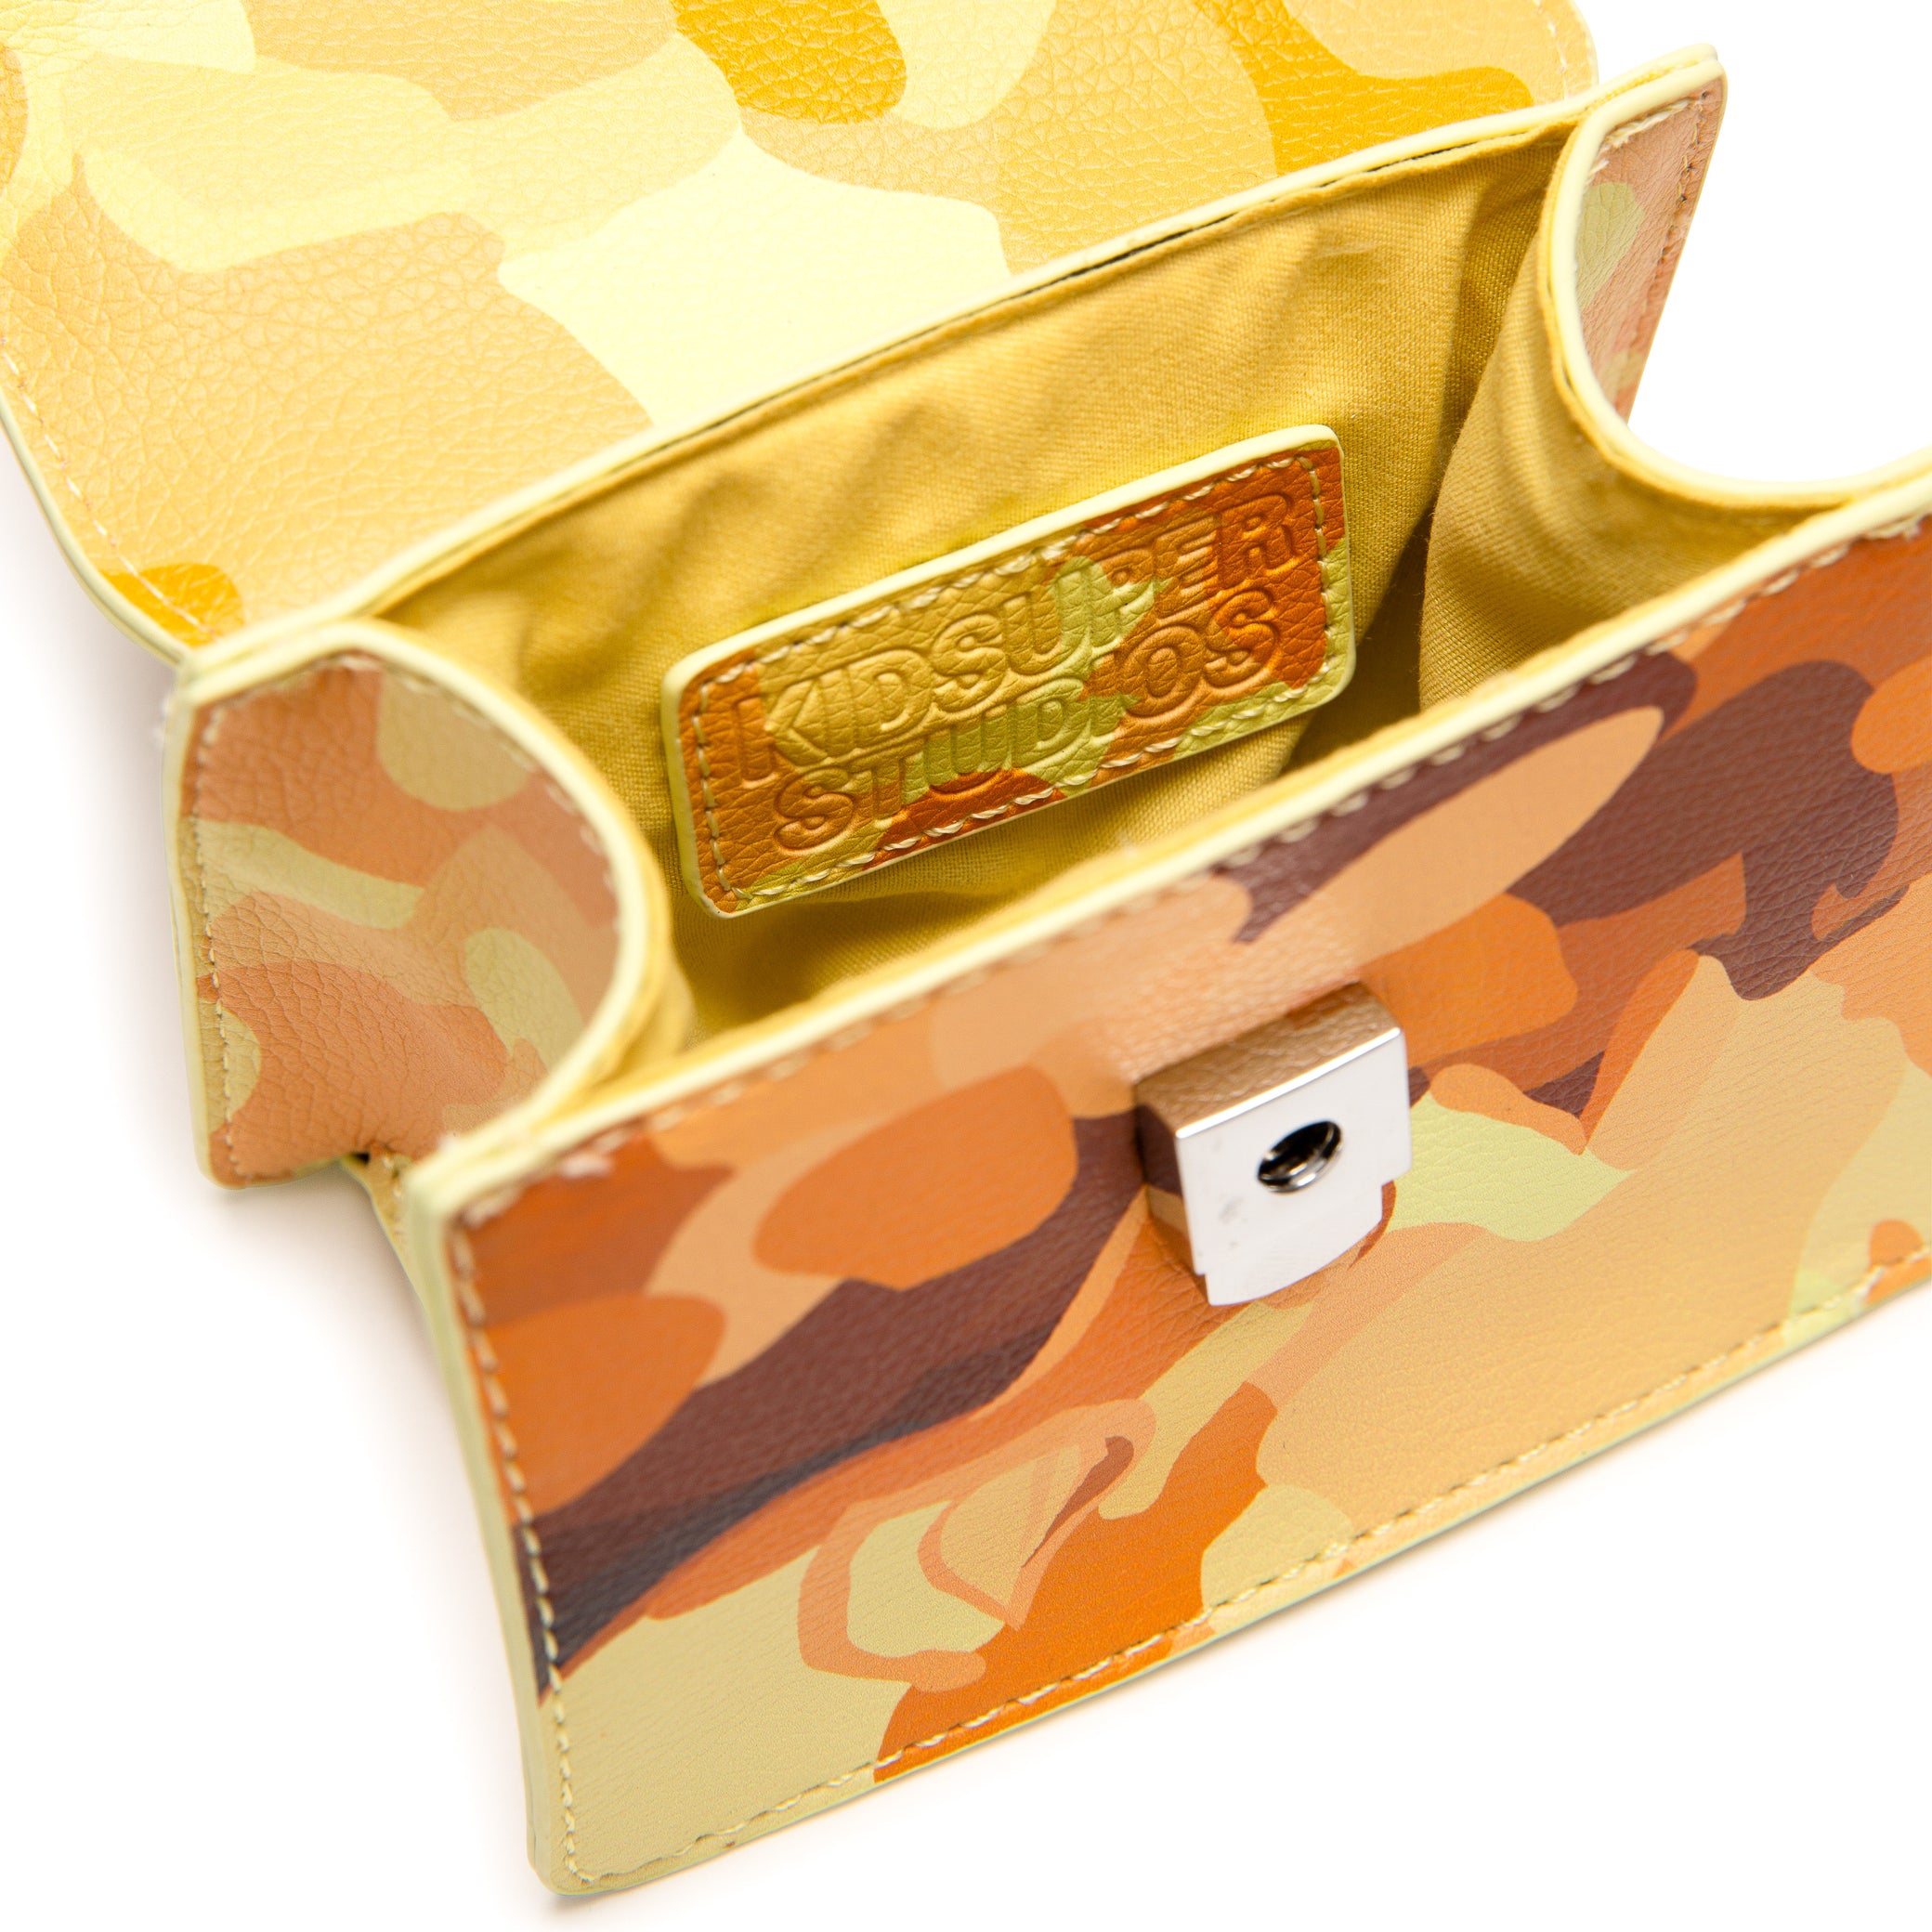 KidSuper Kissing Bag Orange in Vegan PU with Silver-tone - US